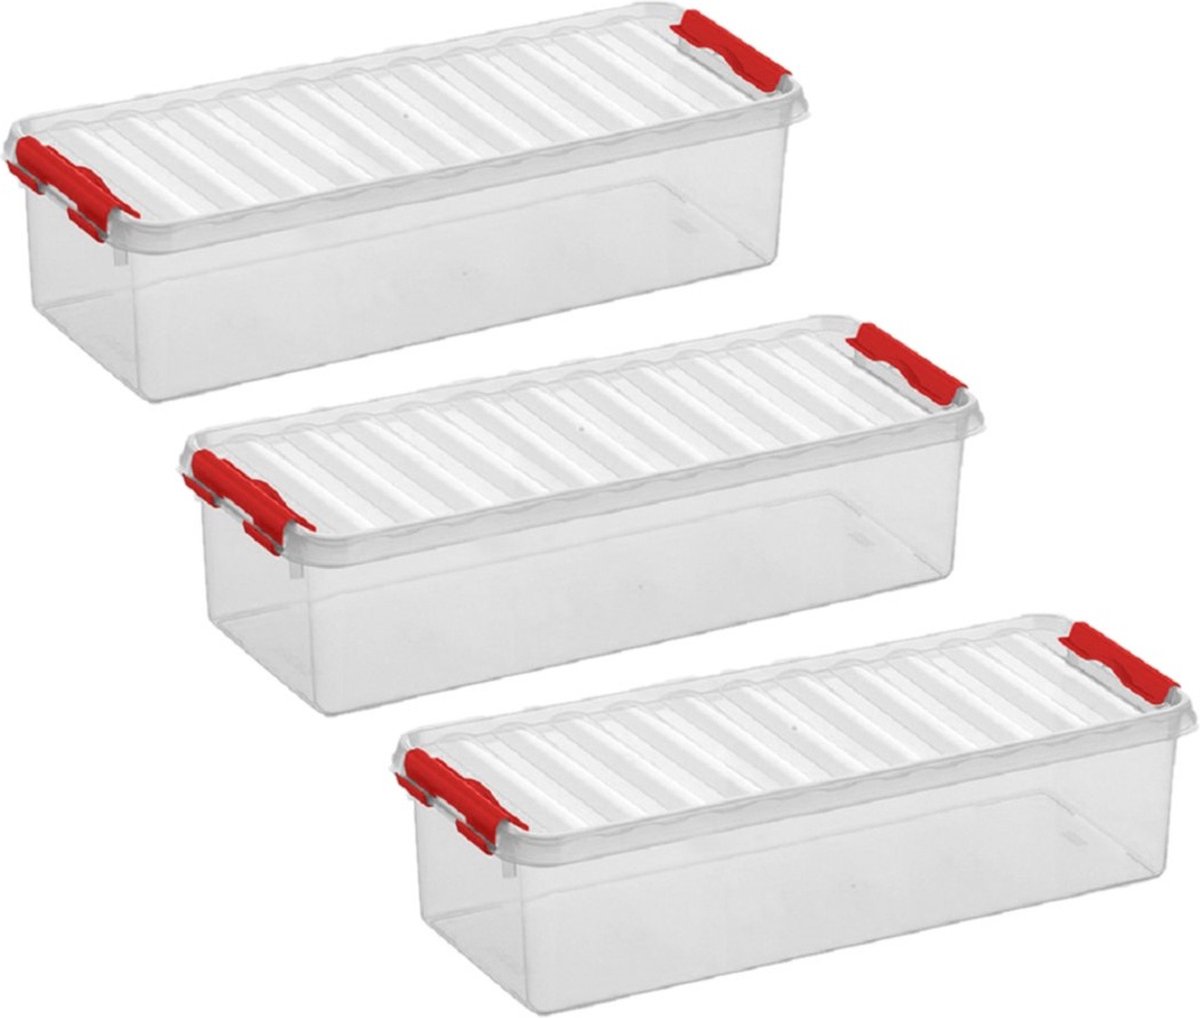 6x stuks opberg box/opbergdoos 3.5 liter 38.5 x 14 x 9.2 cm - Opslagbox - Opbergbak kunststof transparant/rood